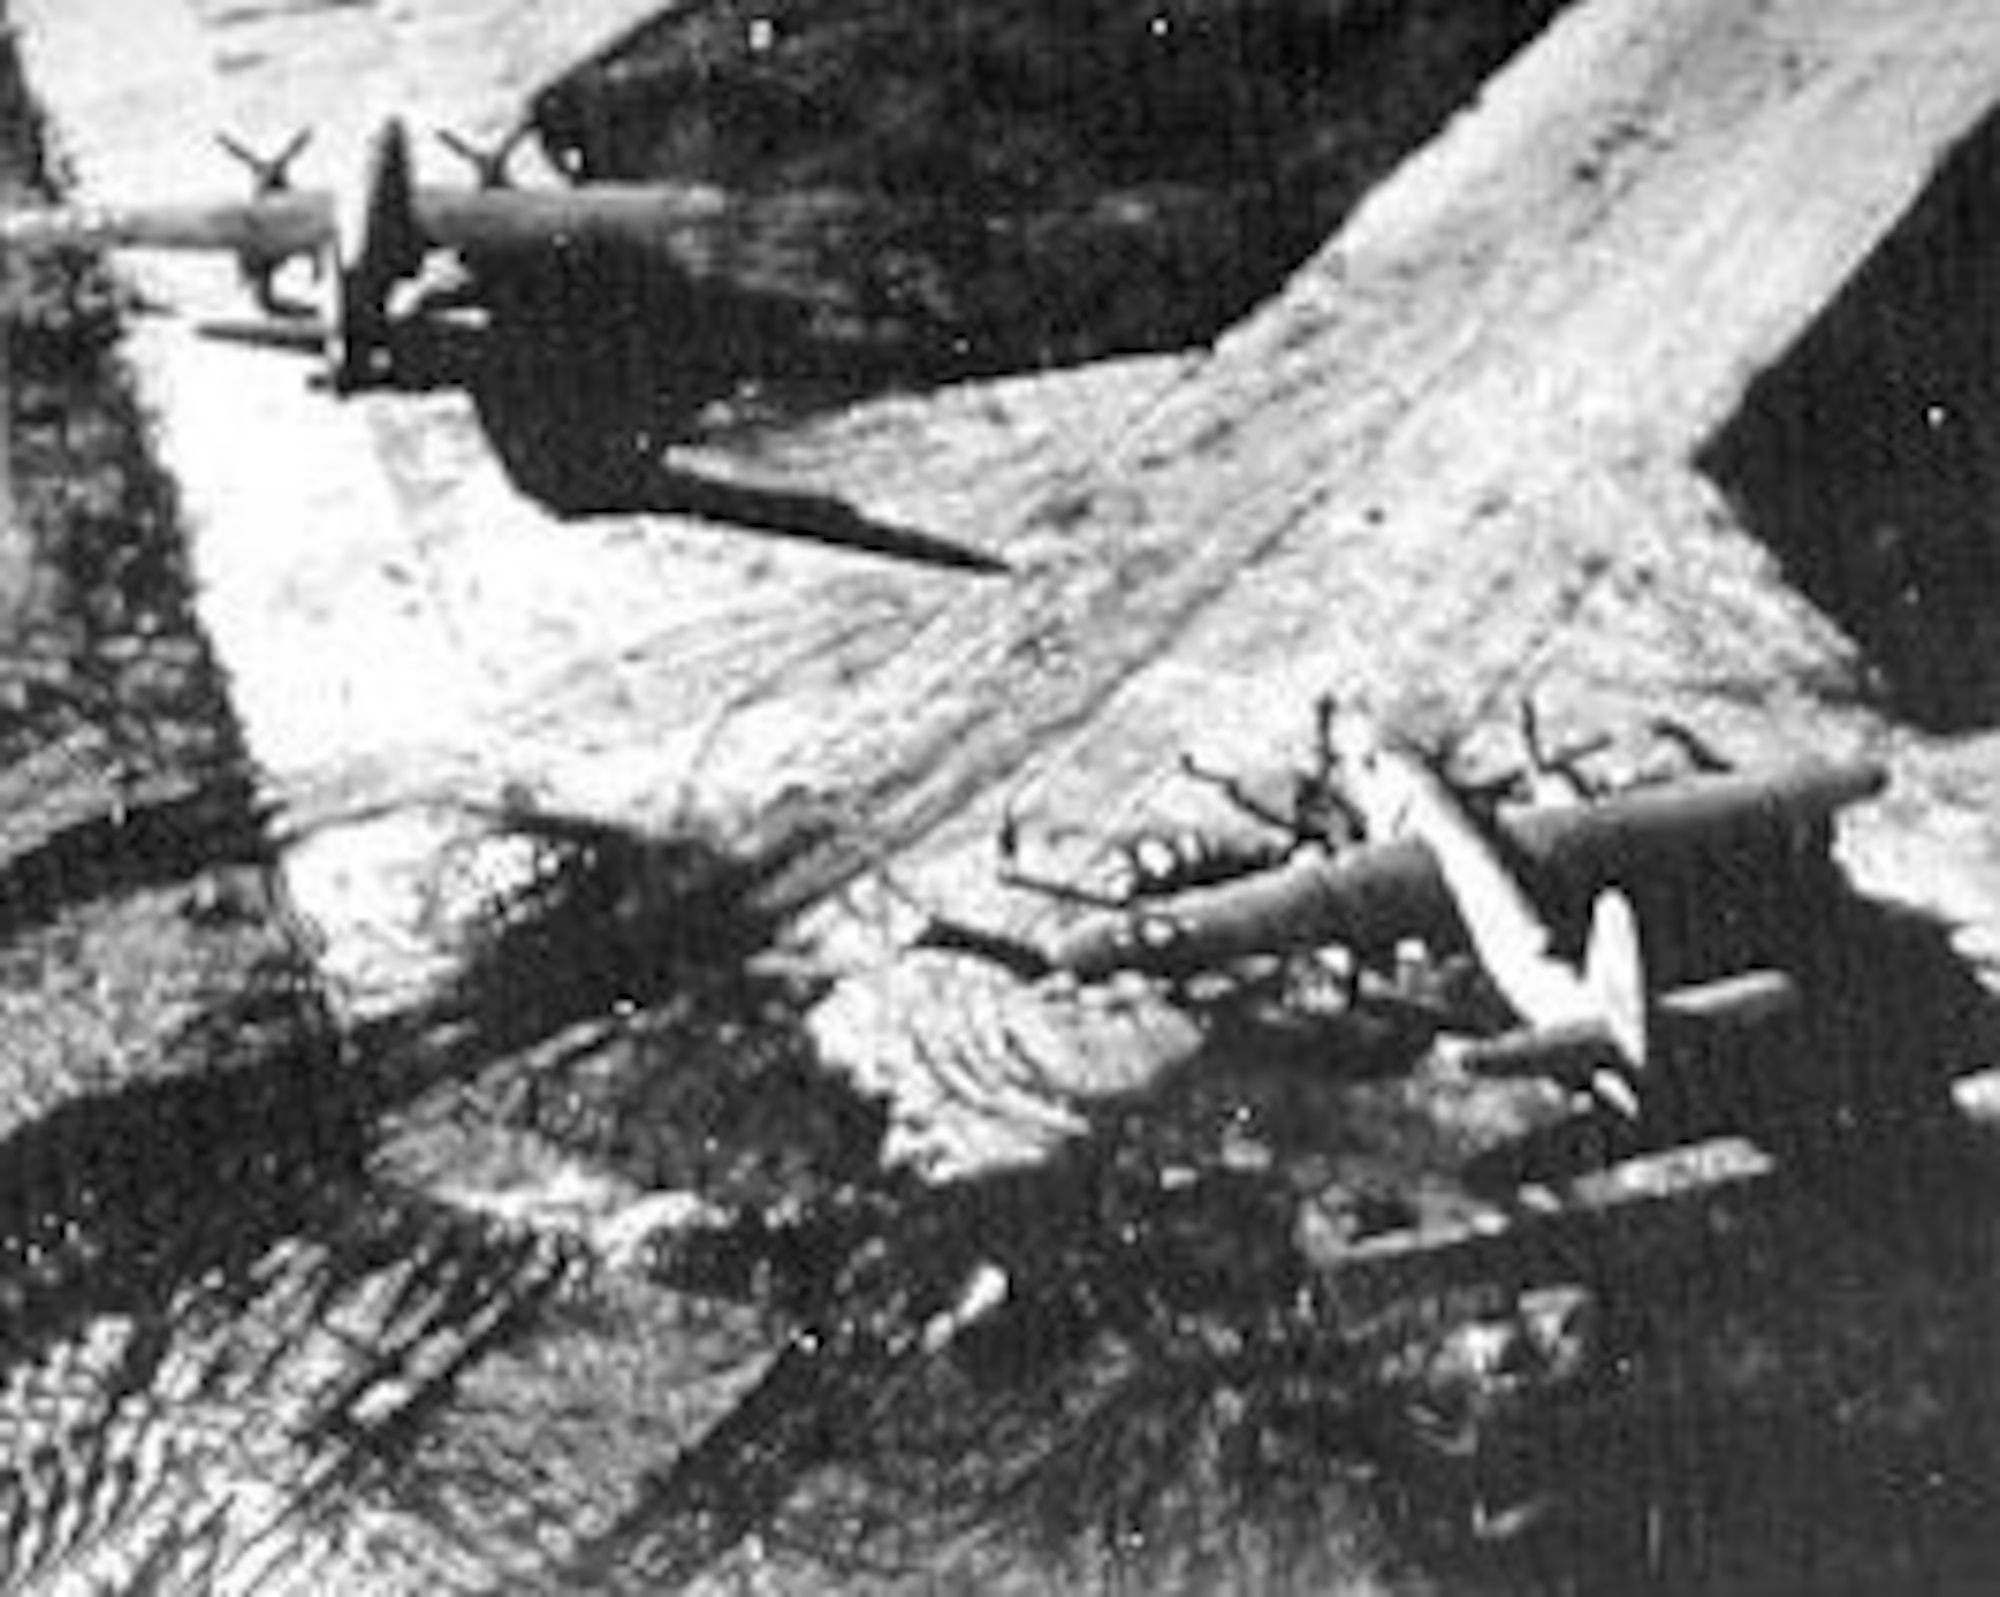 Medium bombers during World War II. (U.S. Air Force photo)